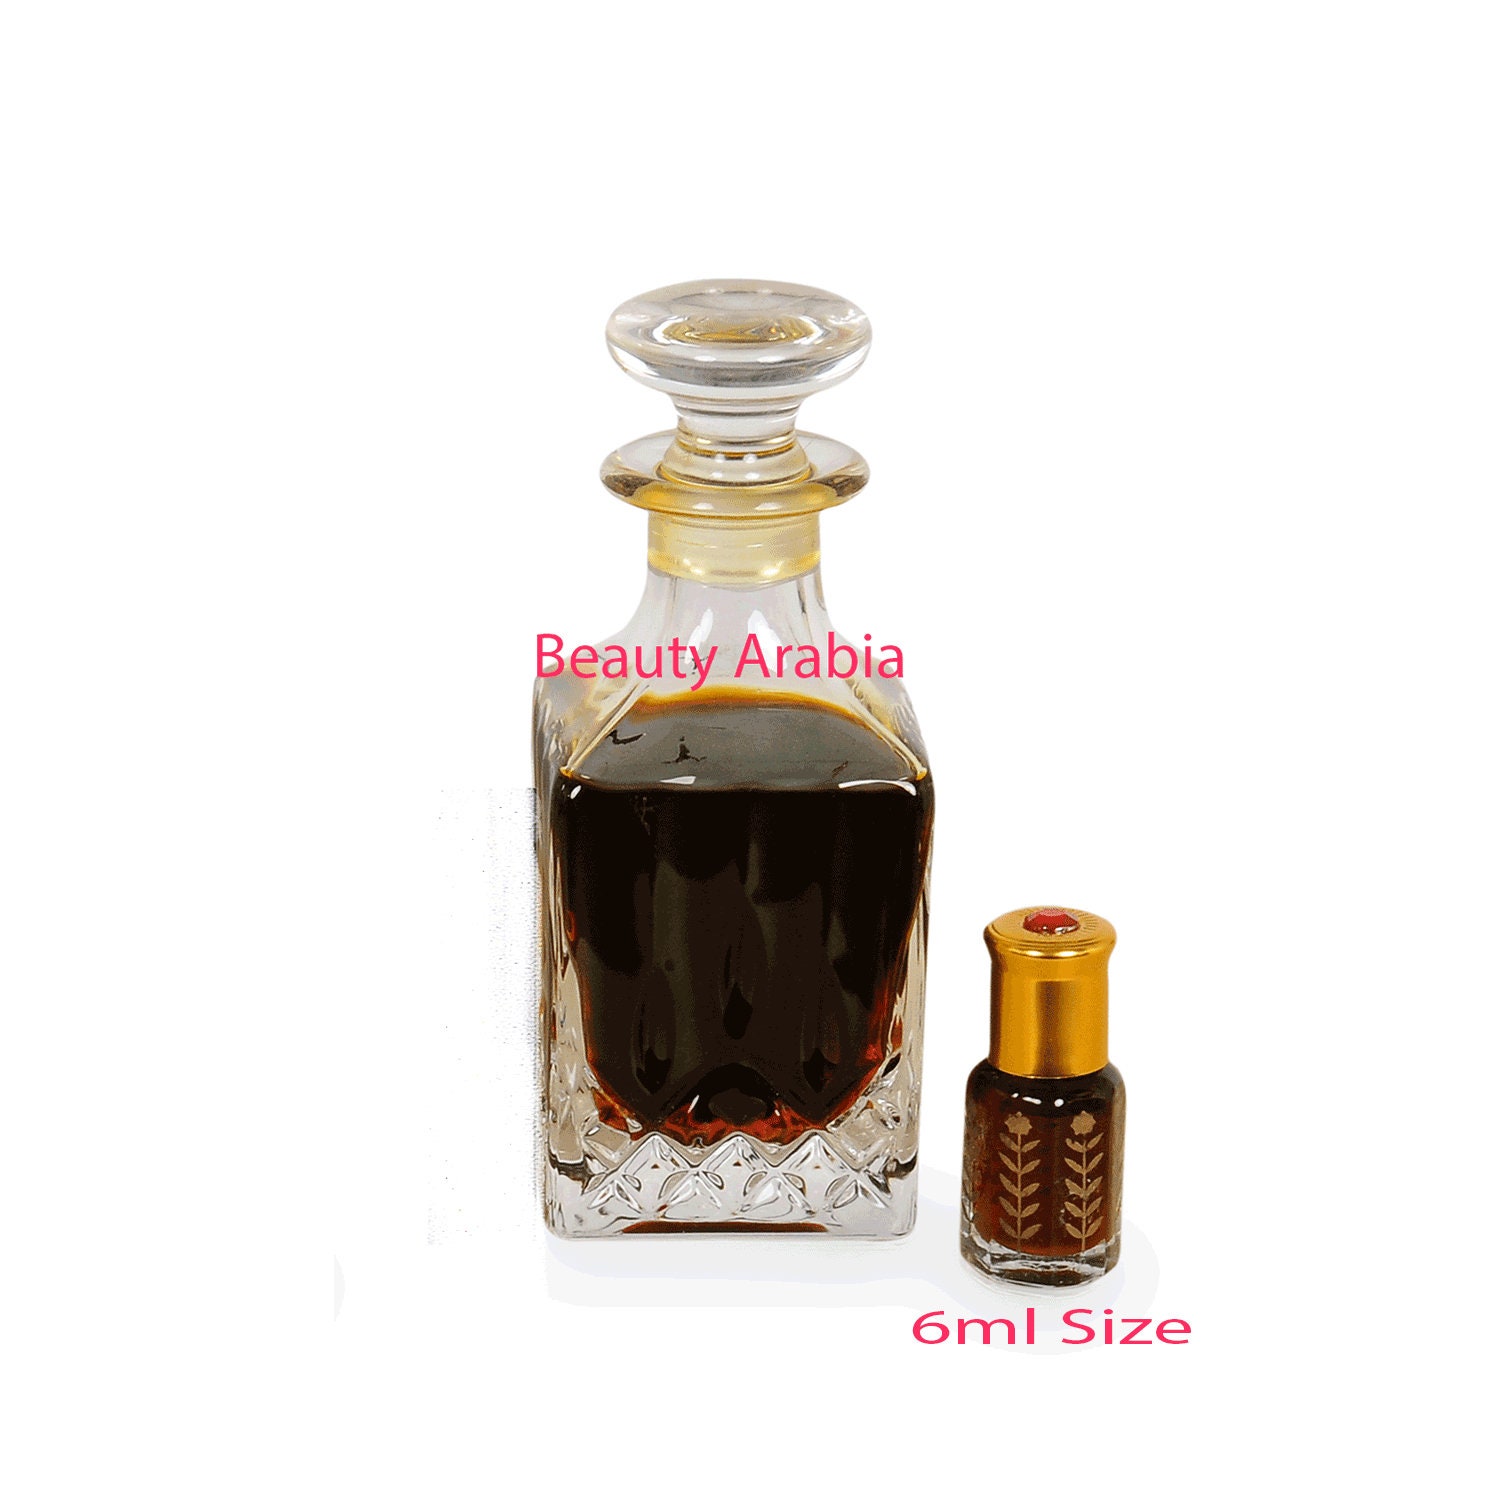 Vanilla Musk Perfume Body Oil 2.7 Fl Oz 